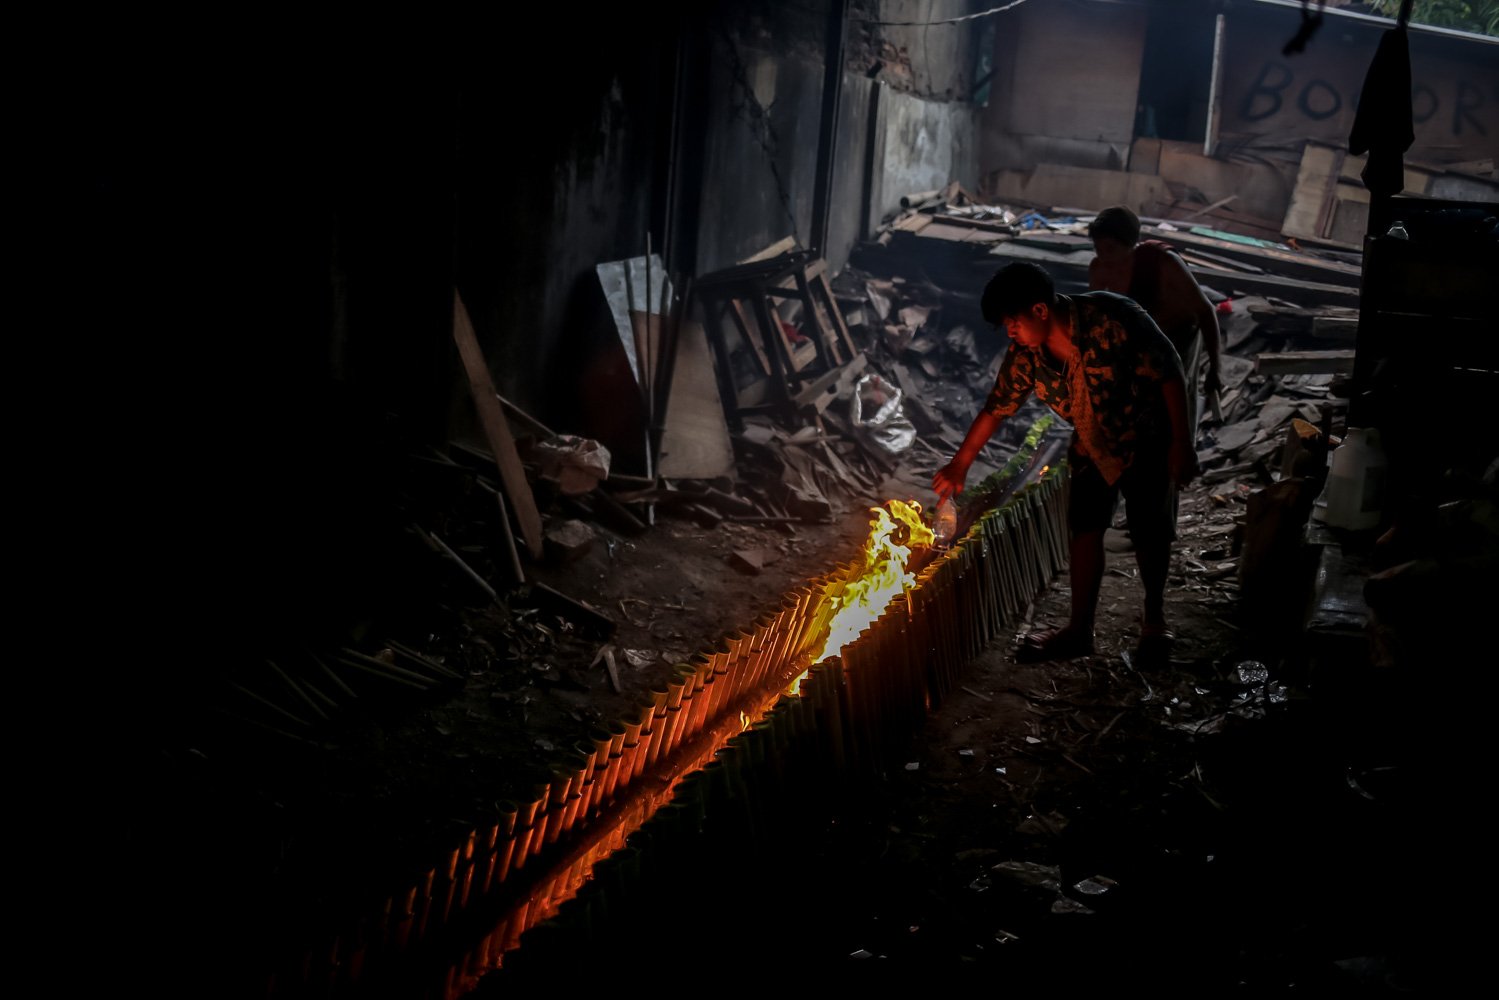 Pekerja menyelesaikan proses pembakaran lemang tapai di kawasan Senen, Jakarta, Selasa (28/3). Selama bulan Ramadhan, pelaku usaha lemang tapai meningkatkan produksi hingga 300 buah per hari dengan harga jual sebesar Rp17 ribu per batang.